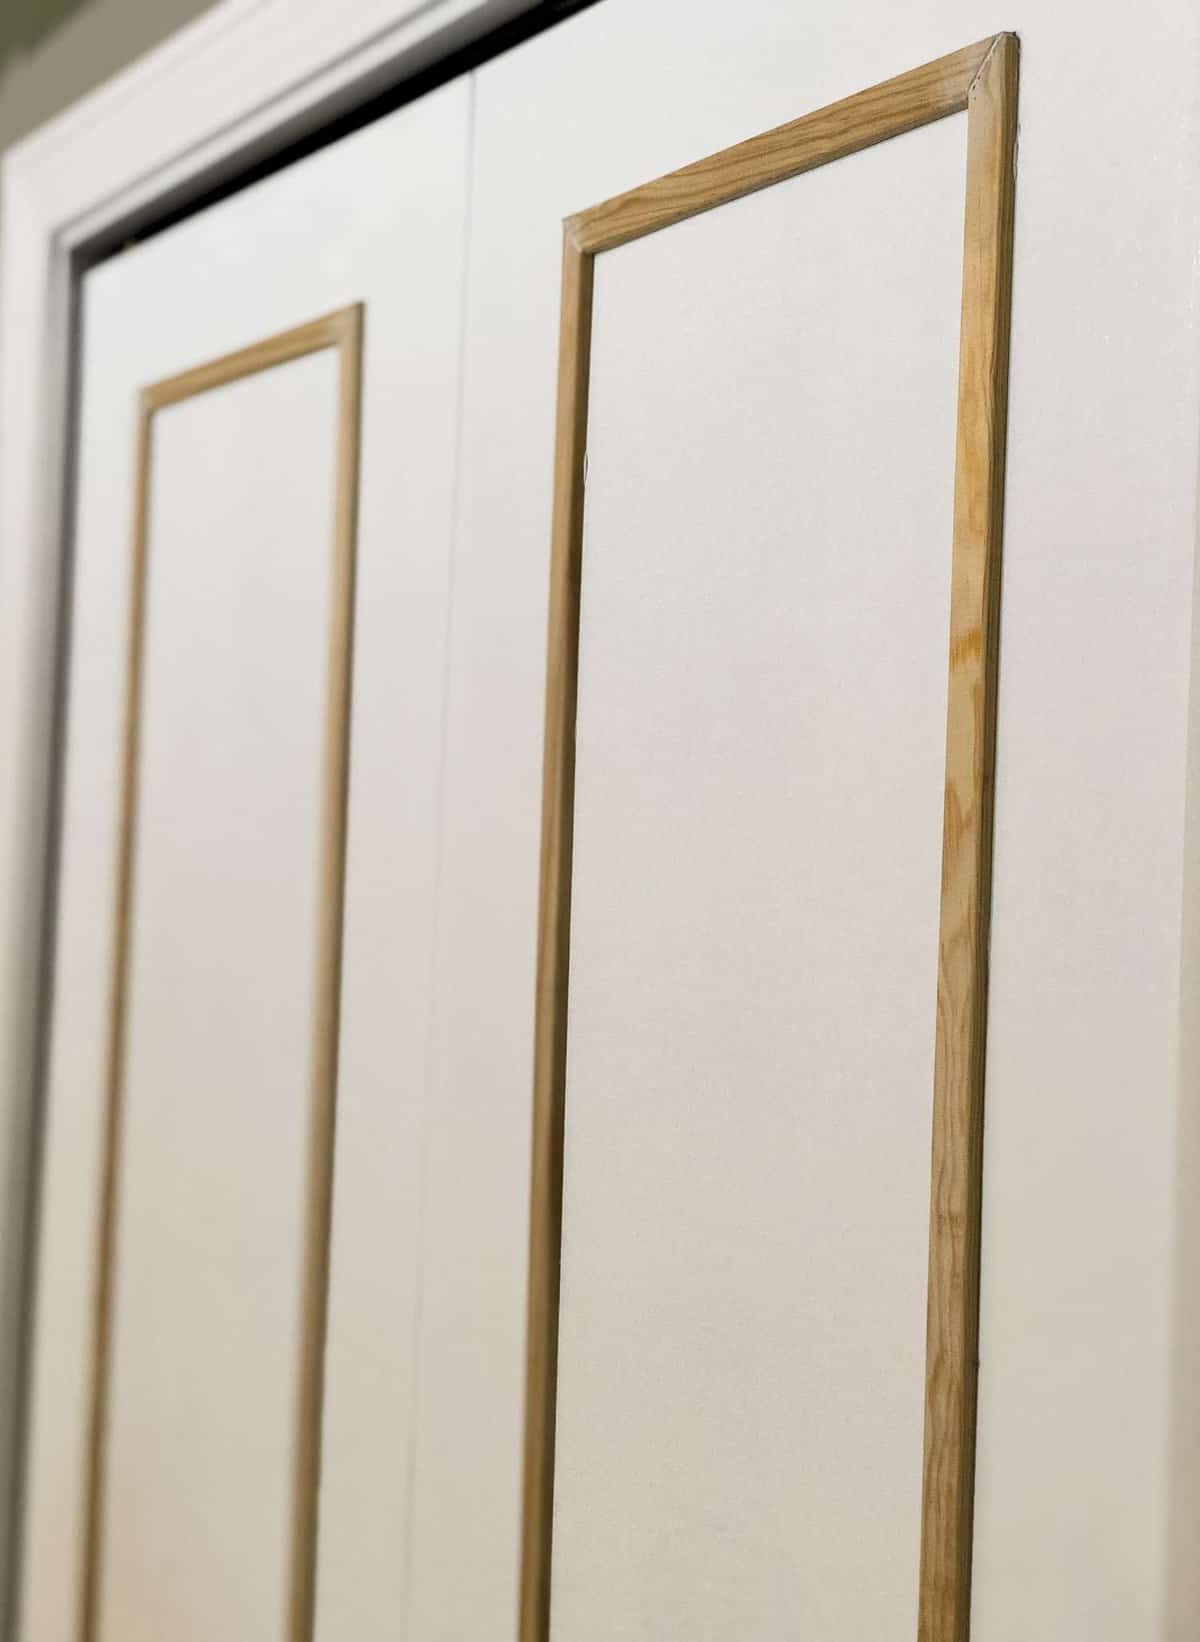 How to add wood trim to bi-fold closet doors to create custom closet doors.